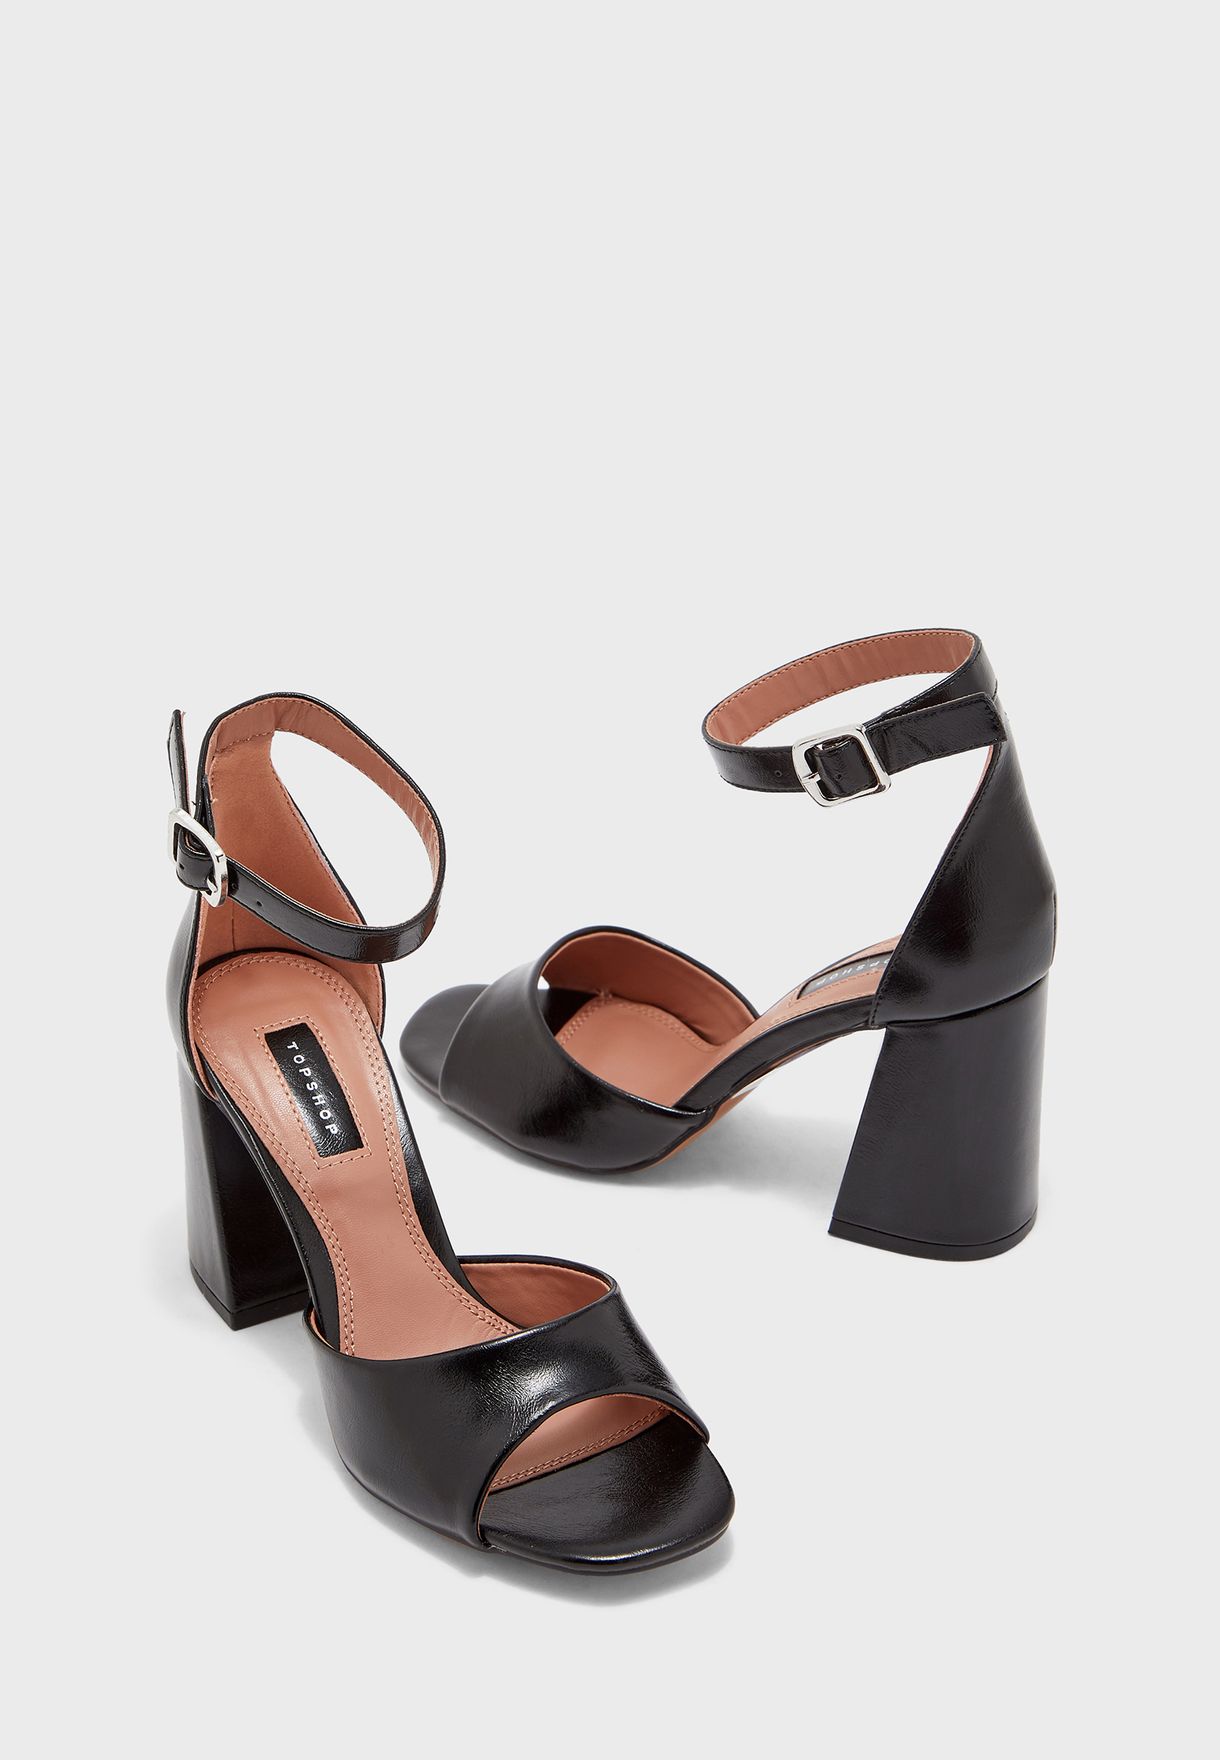 topshop black heels